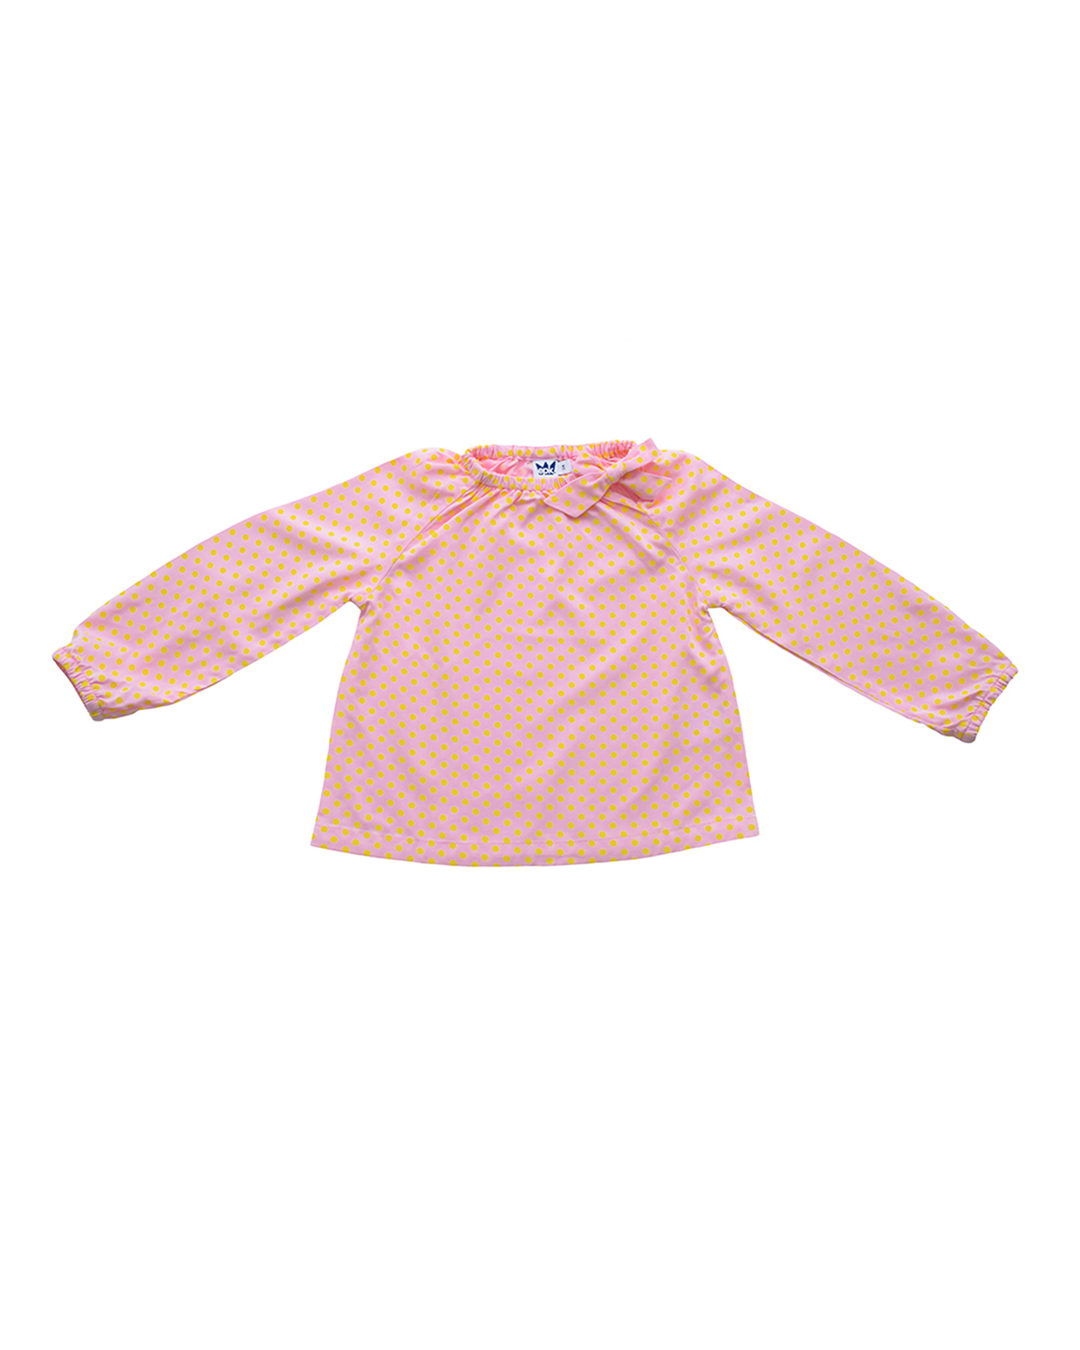 Blusa manga larga rosada con puntos amarillos